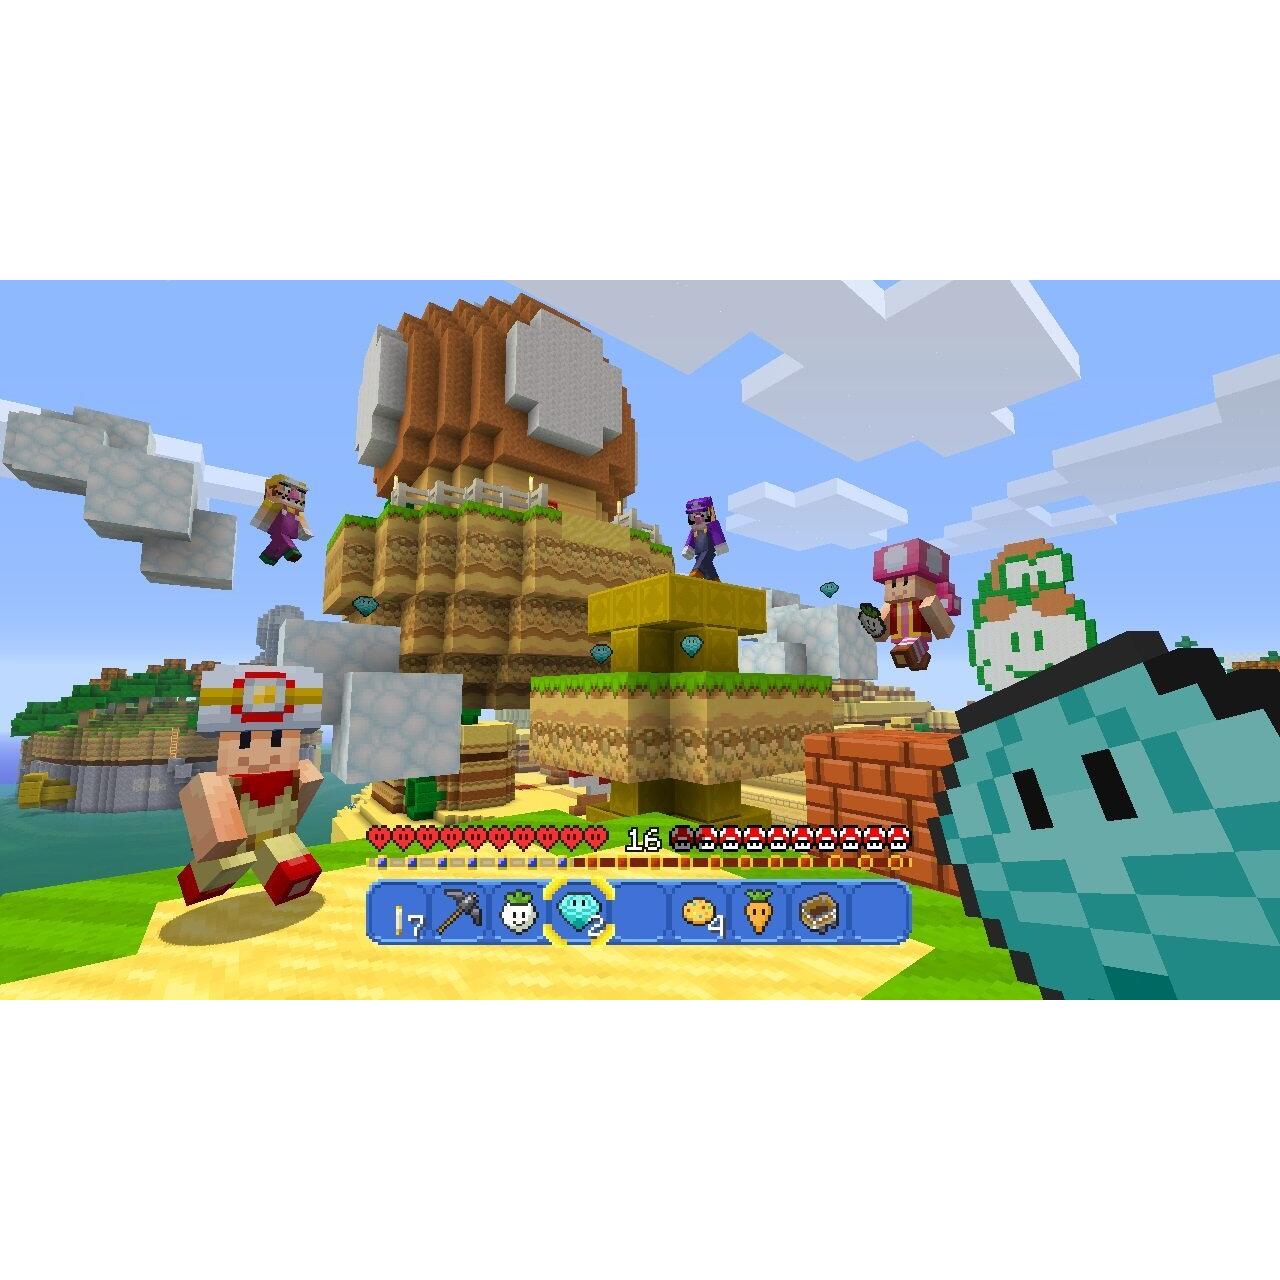 . koolhydraat roddel Minecraft: Wii U Editie - Wii U (Wii U) kopen - €26.99